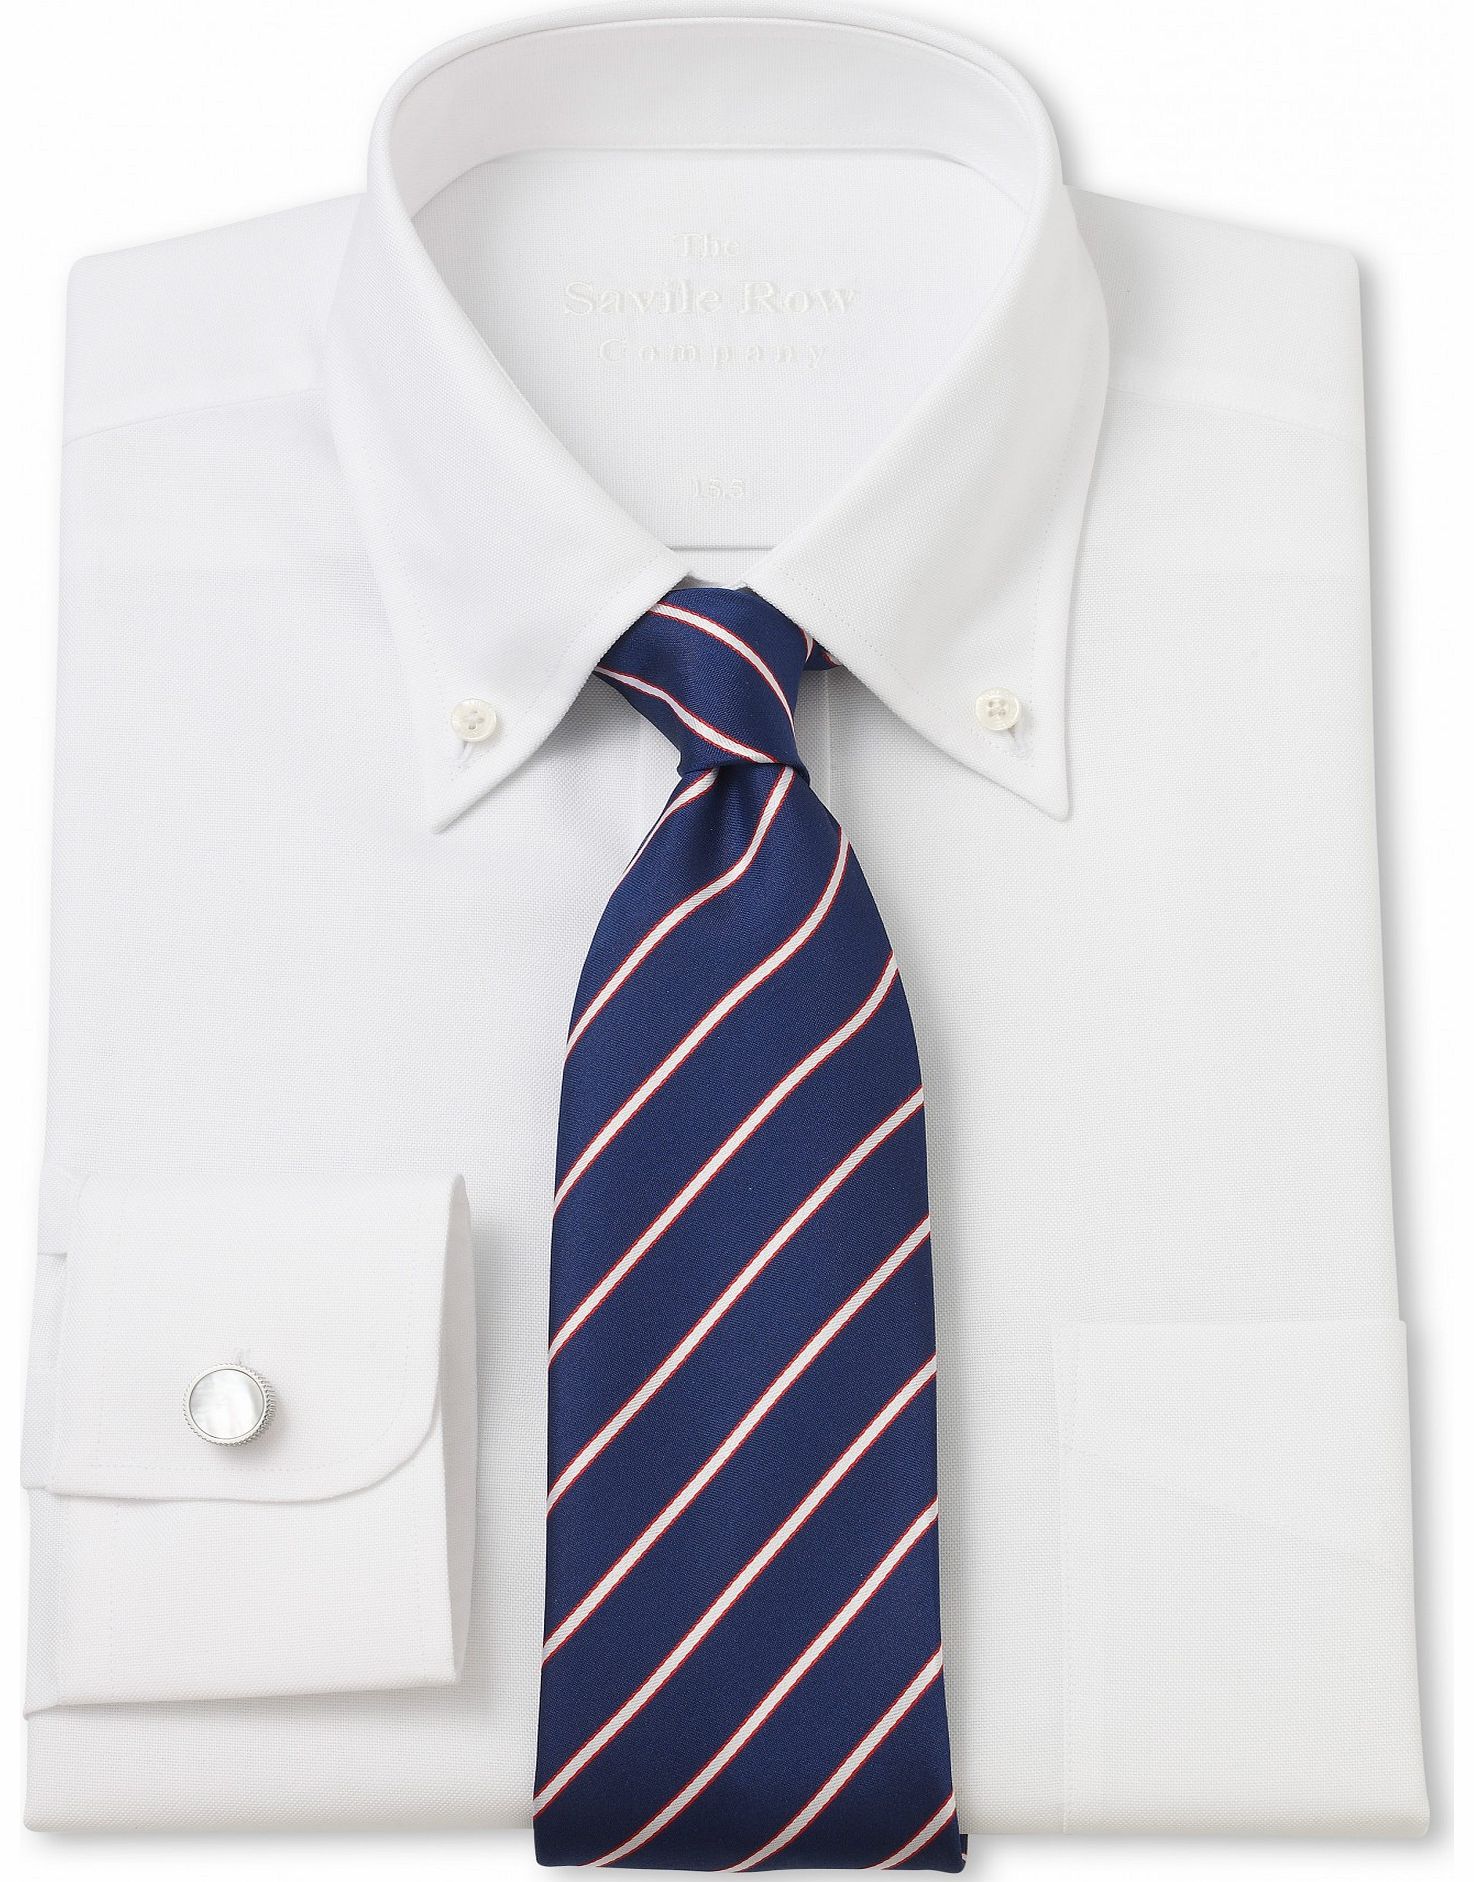 Savile Row Company White Oxford Button Down Classic Shirt 17``